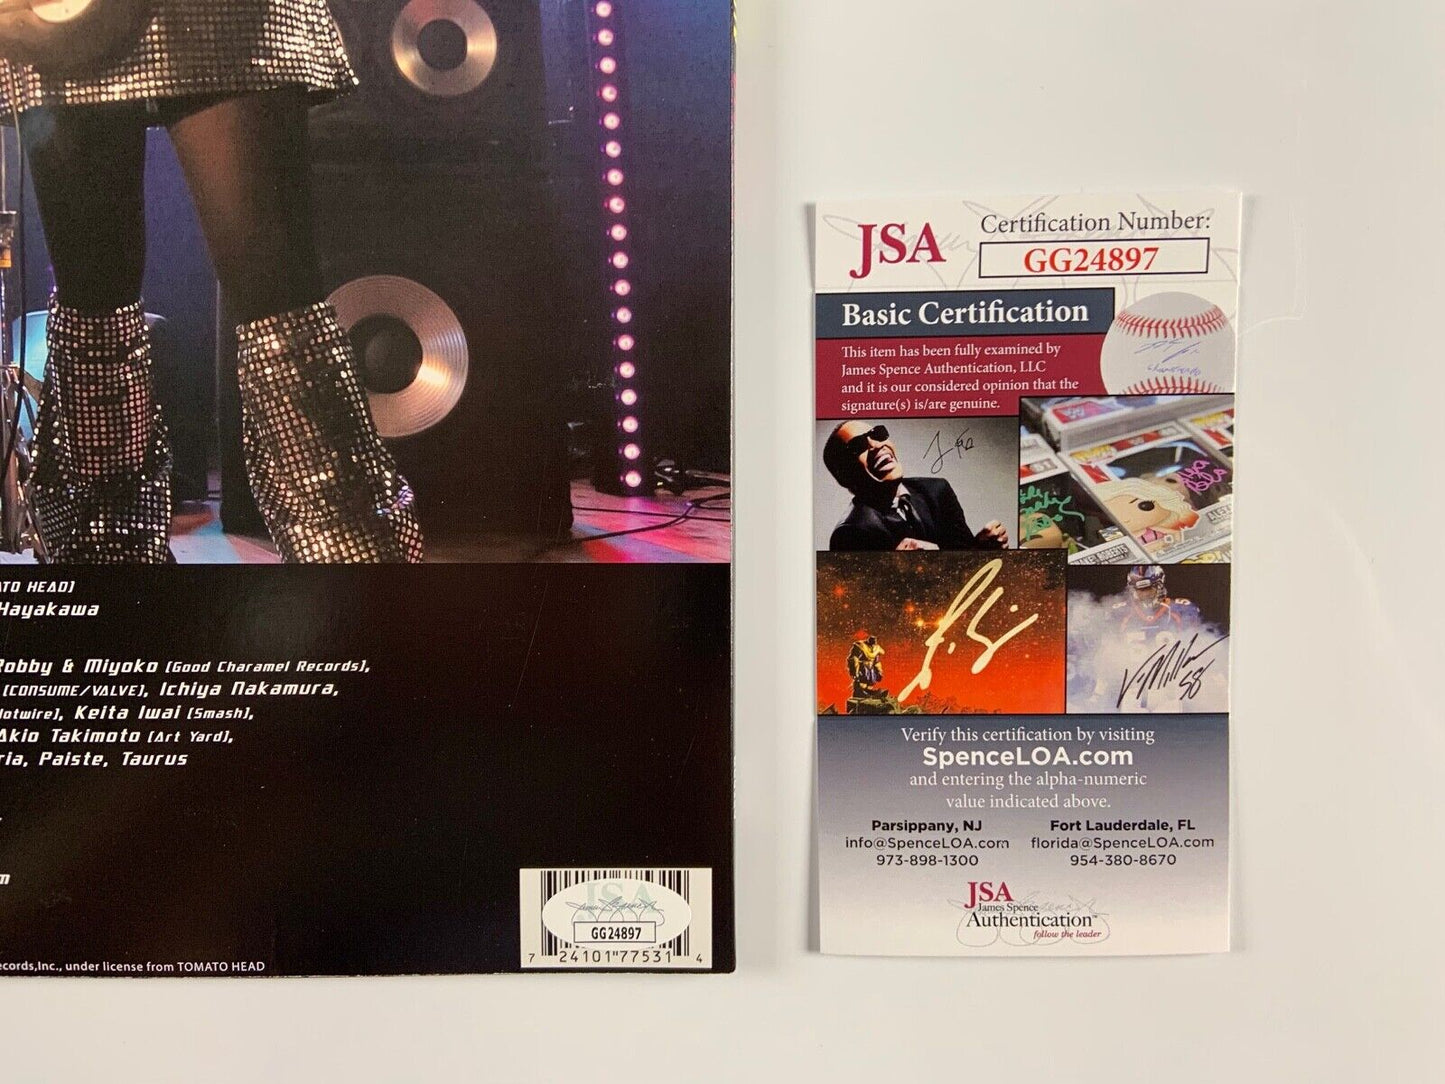 Shonen Knife Signed JSA Autograph Signed Album Overdrive Multi Signed